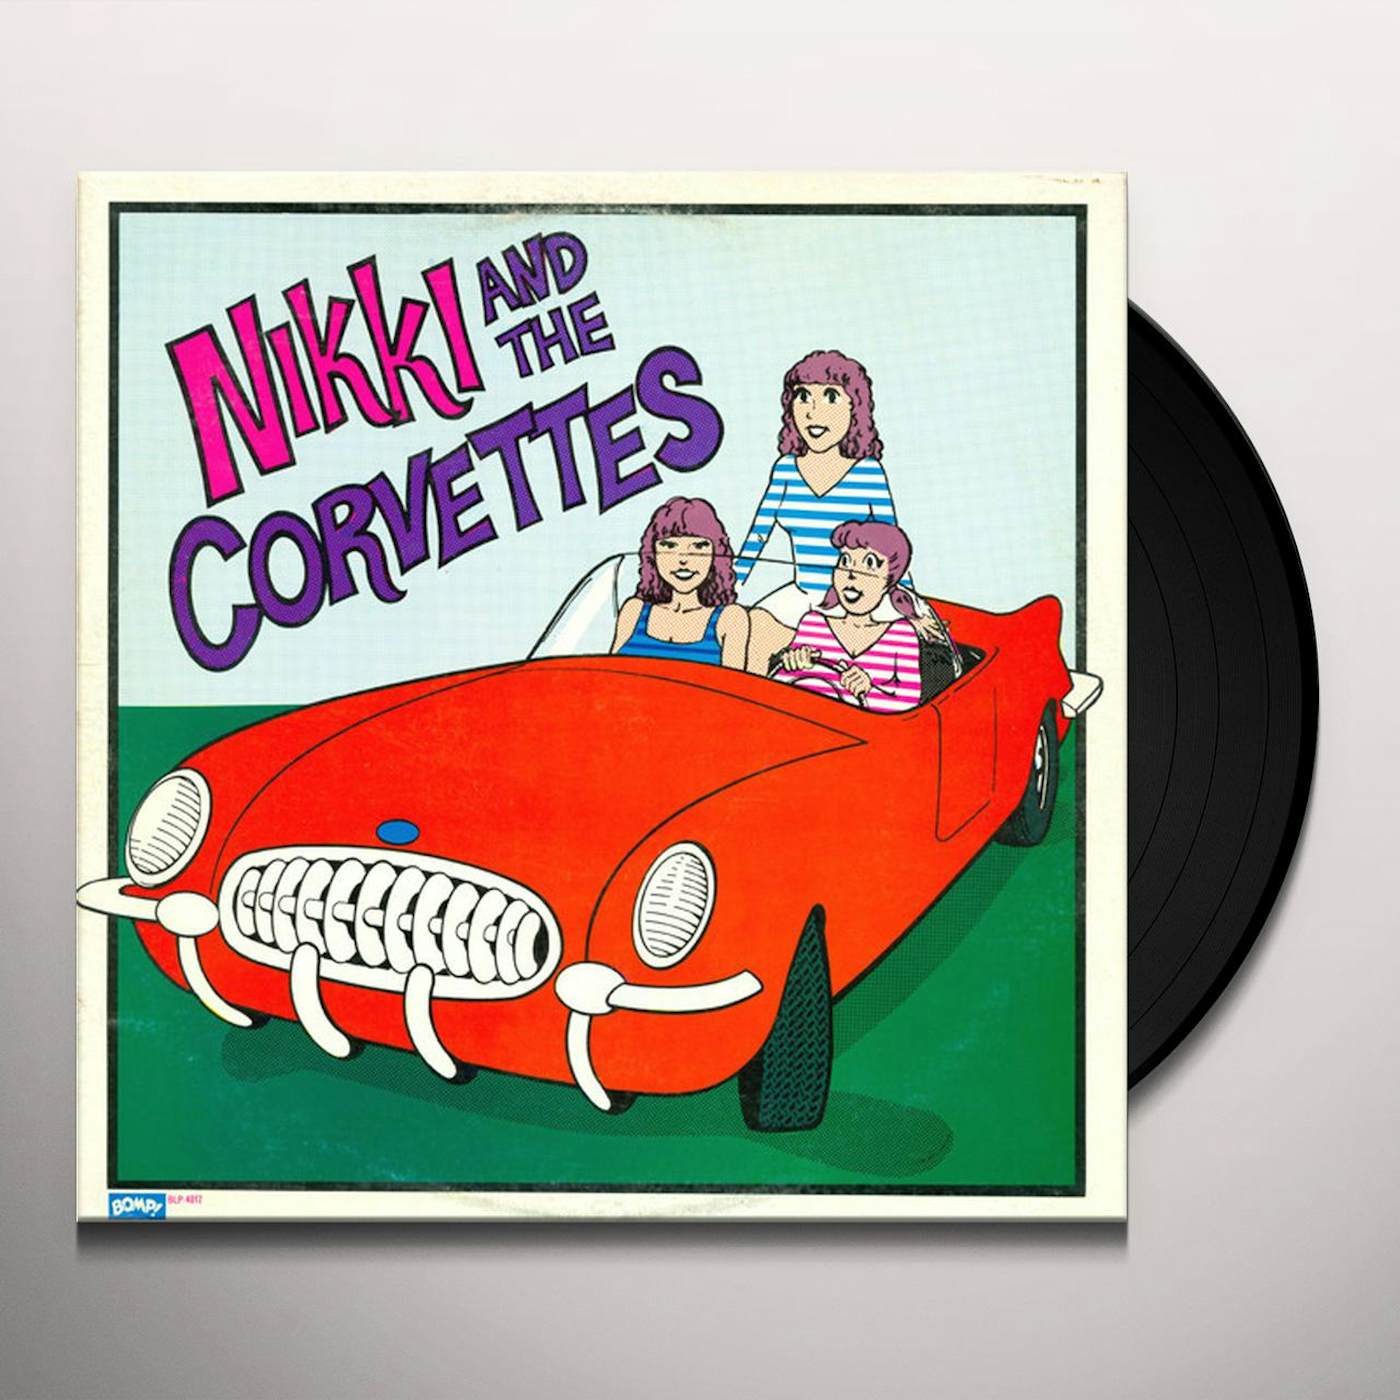 NIKKI & THE CORVETTES (BLUE VINYL) Vinyl Record